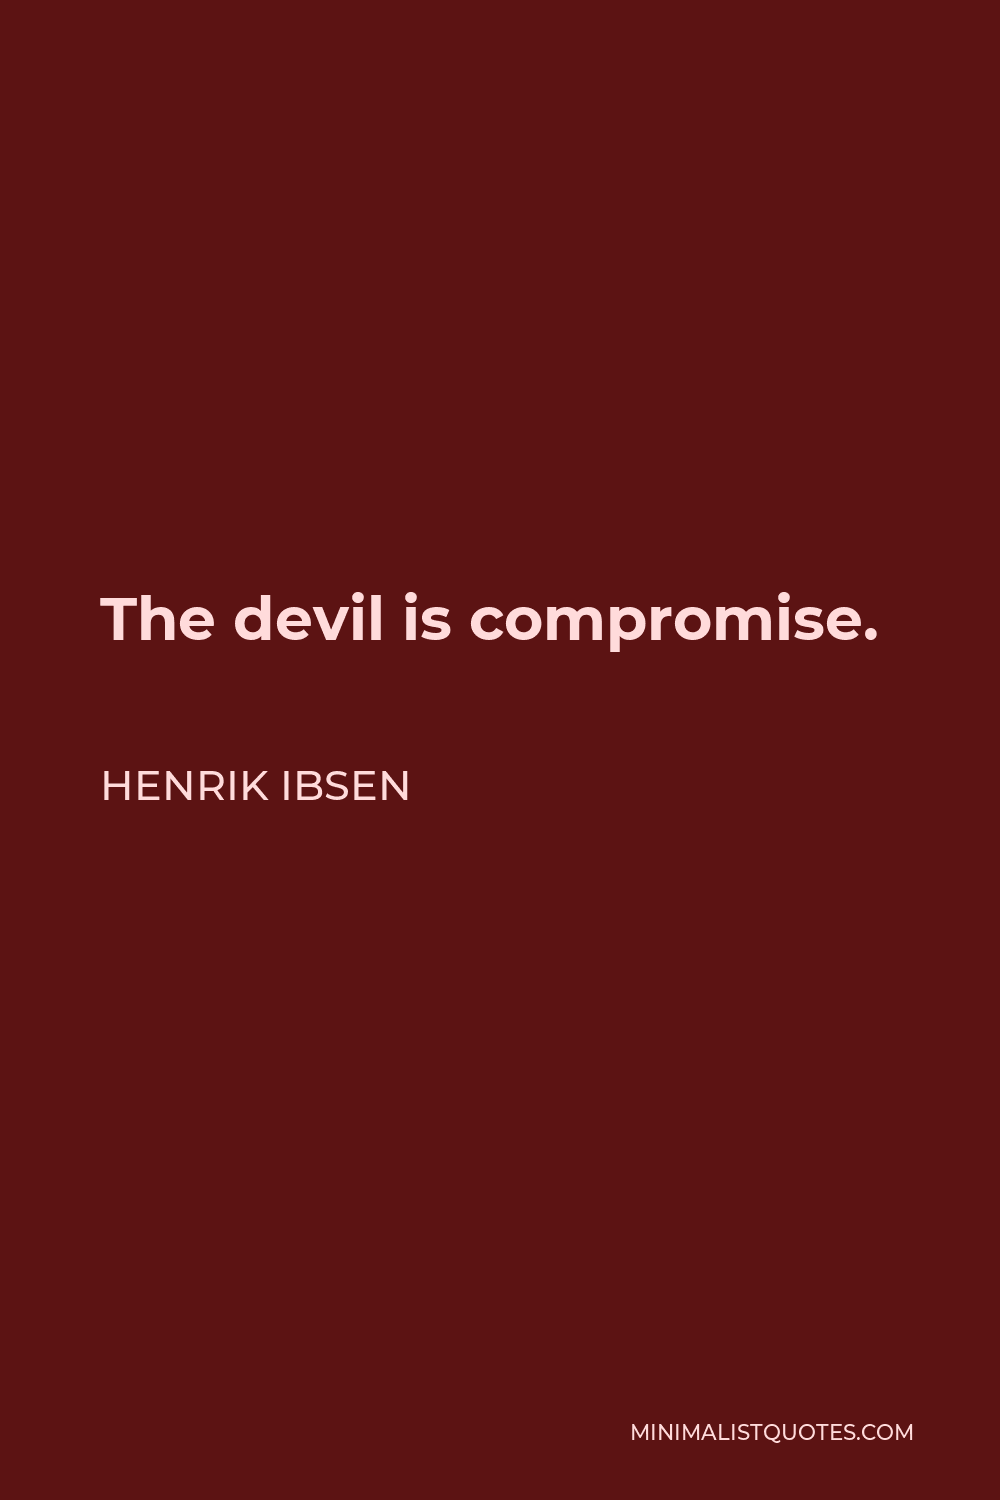 Henrik Ibsen Quote - The devil is compromise.